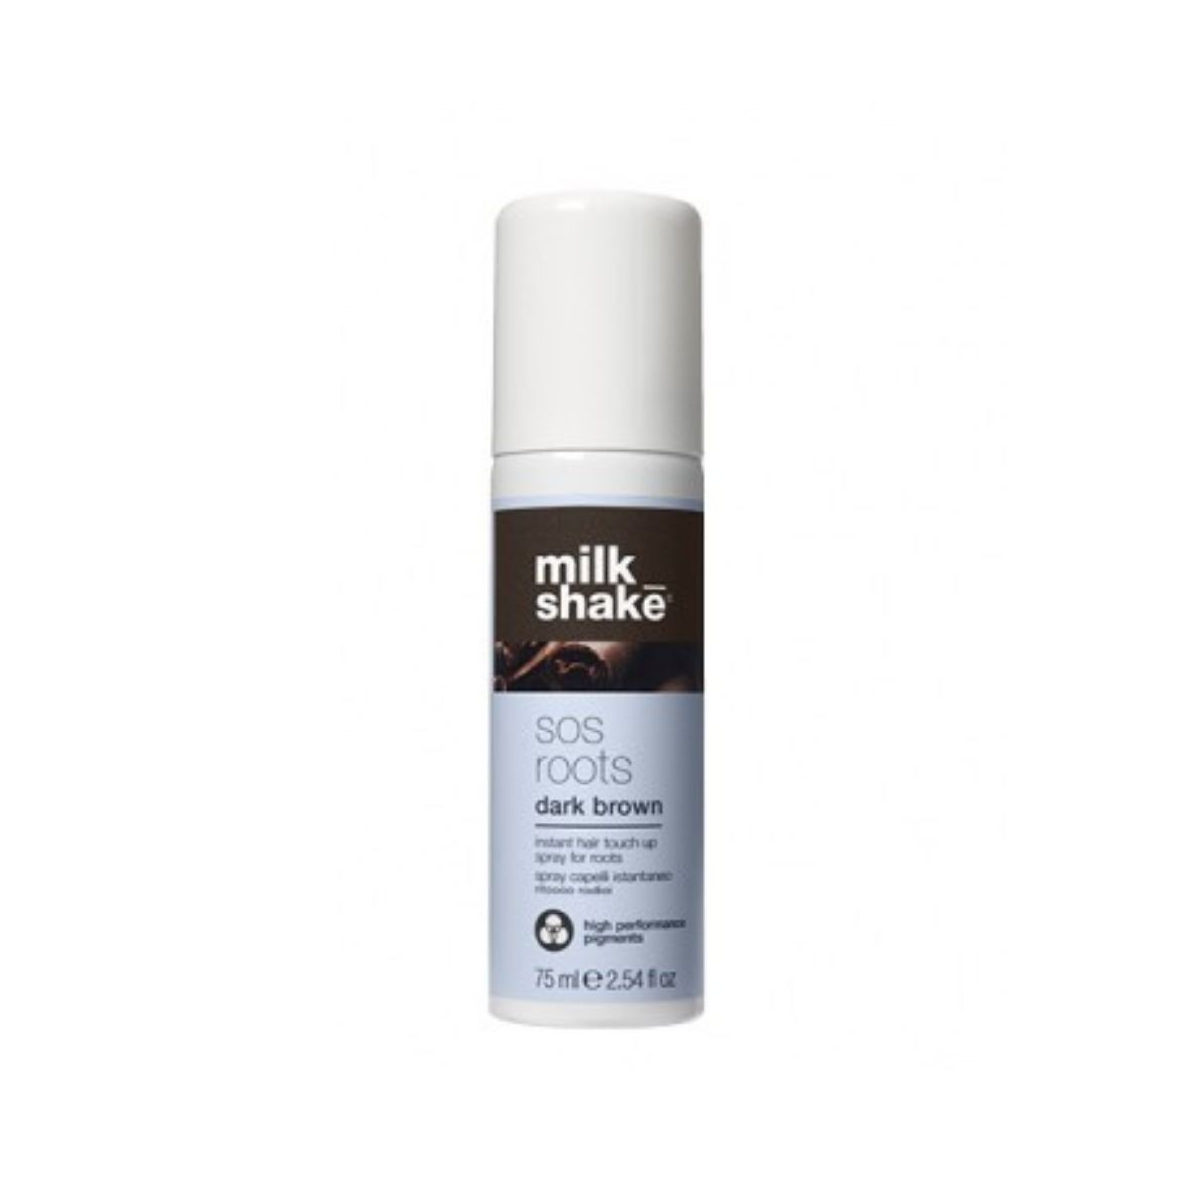 Z.ONE - MILK SHAKE - SOS ROOTS DARK BROWN (75ml) Spray capelli istantaneo ritocco radici